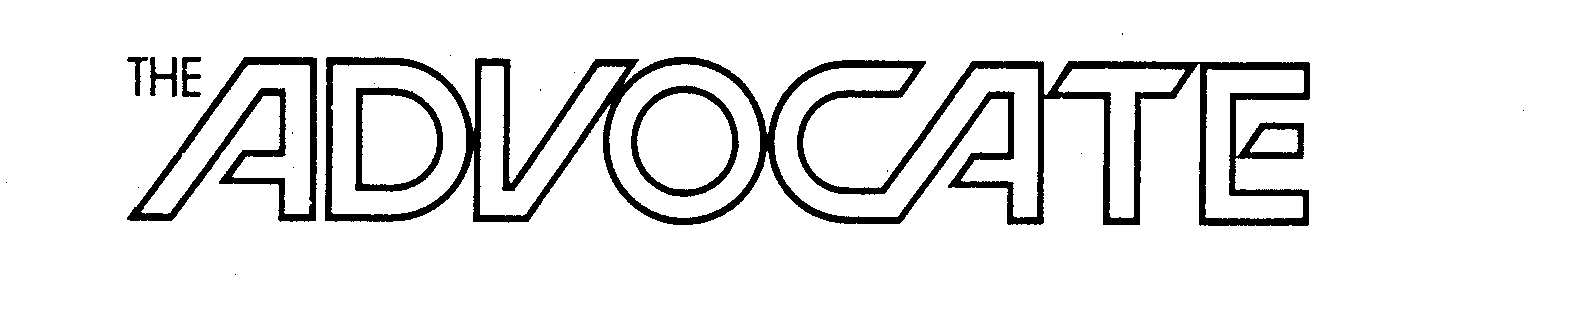 Trademark Logo THE ADVOCATE